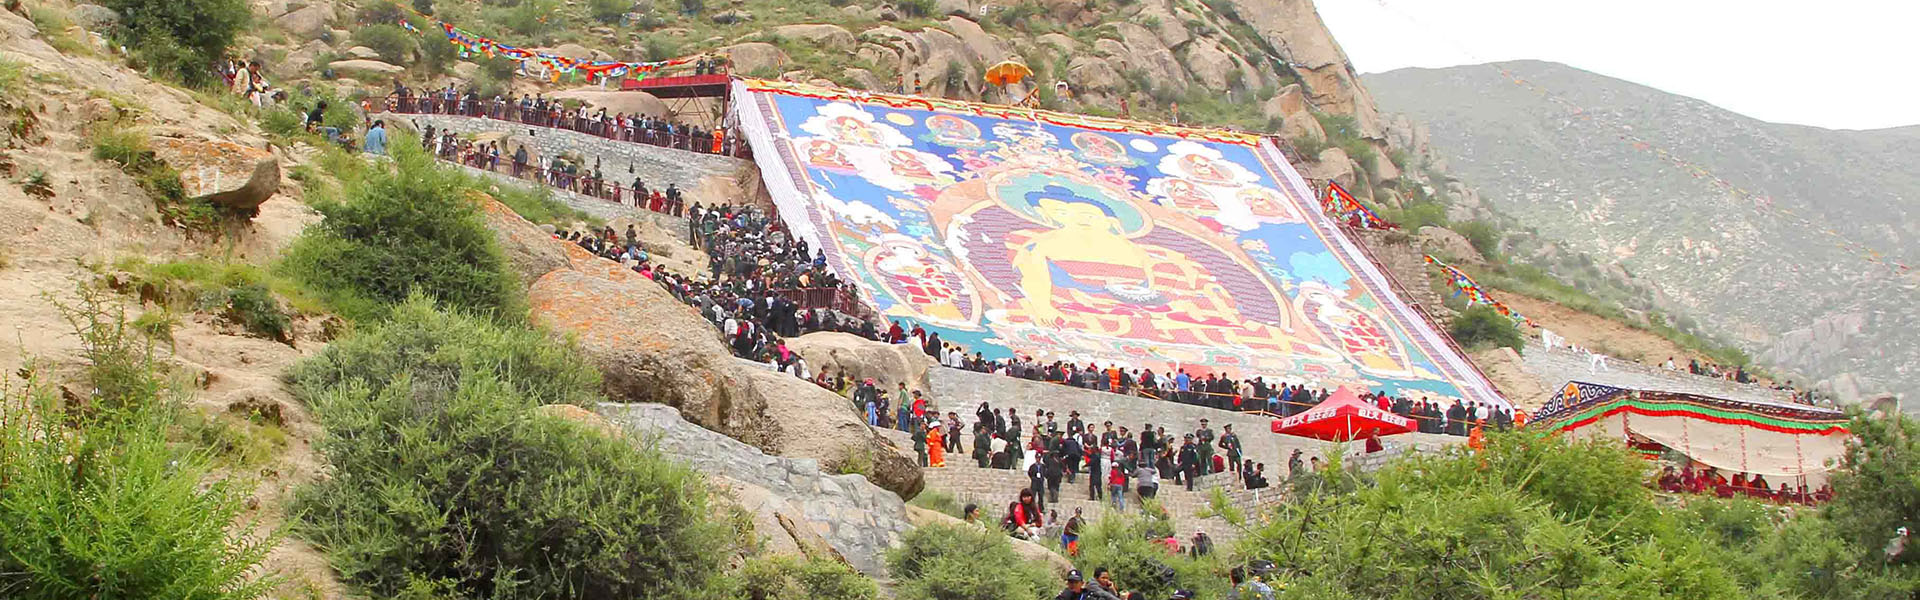 Travel to Tibet during Tibetan festival time